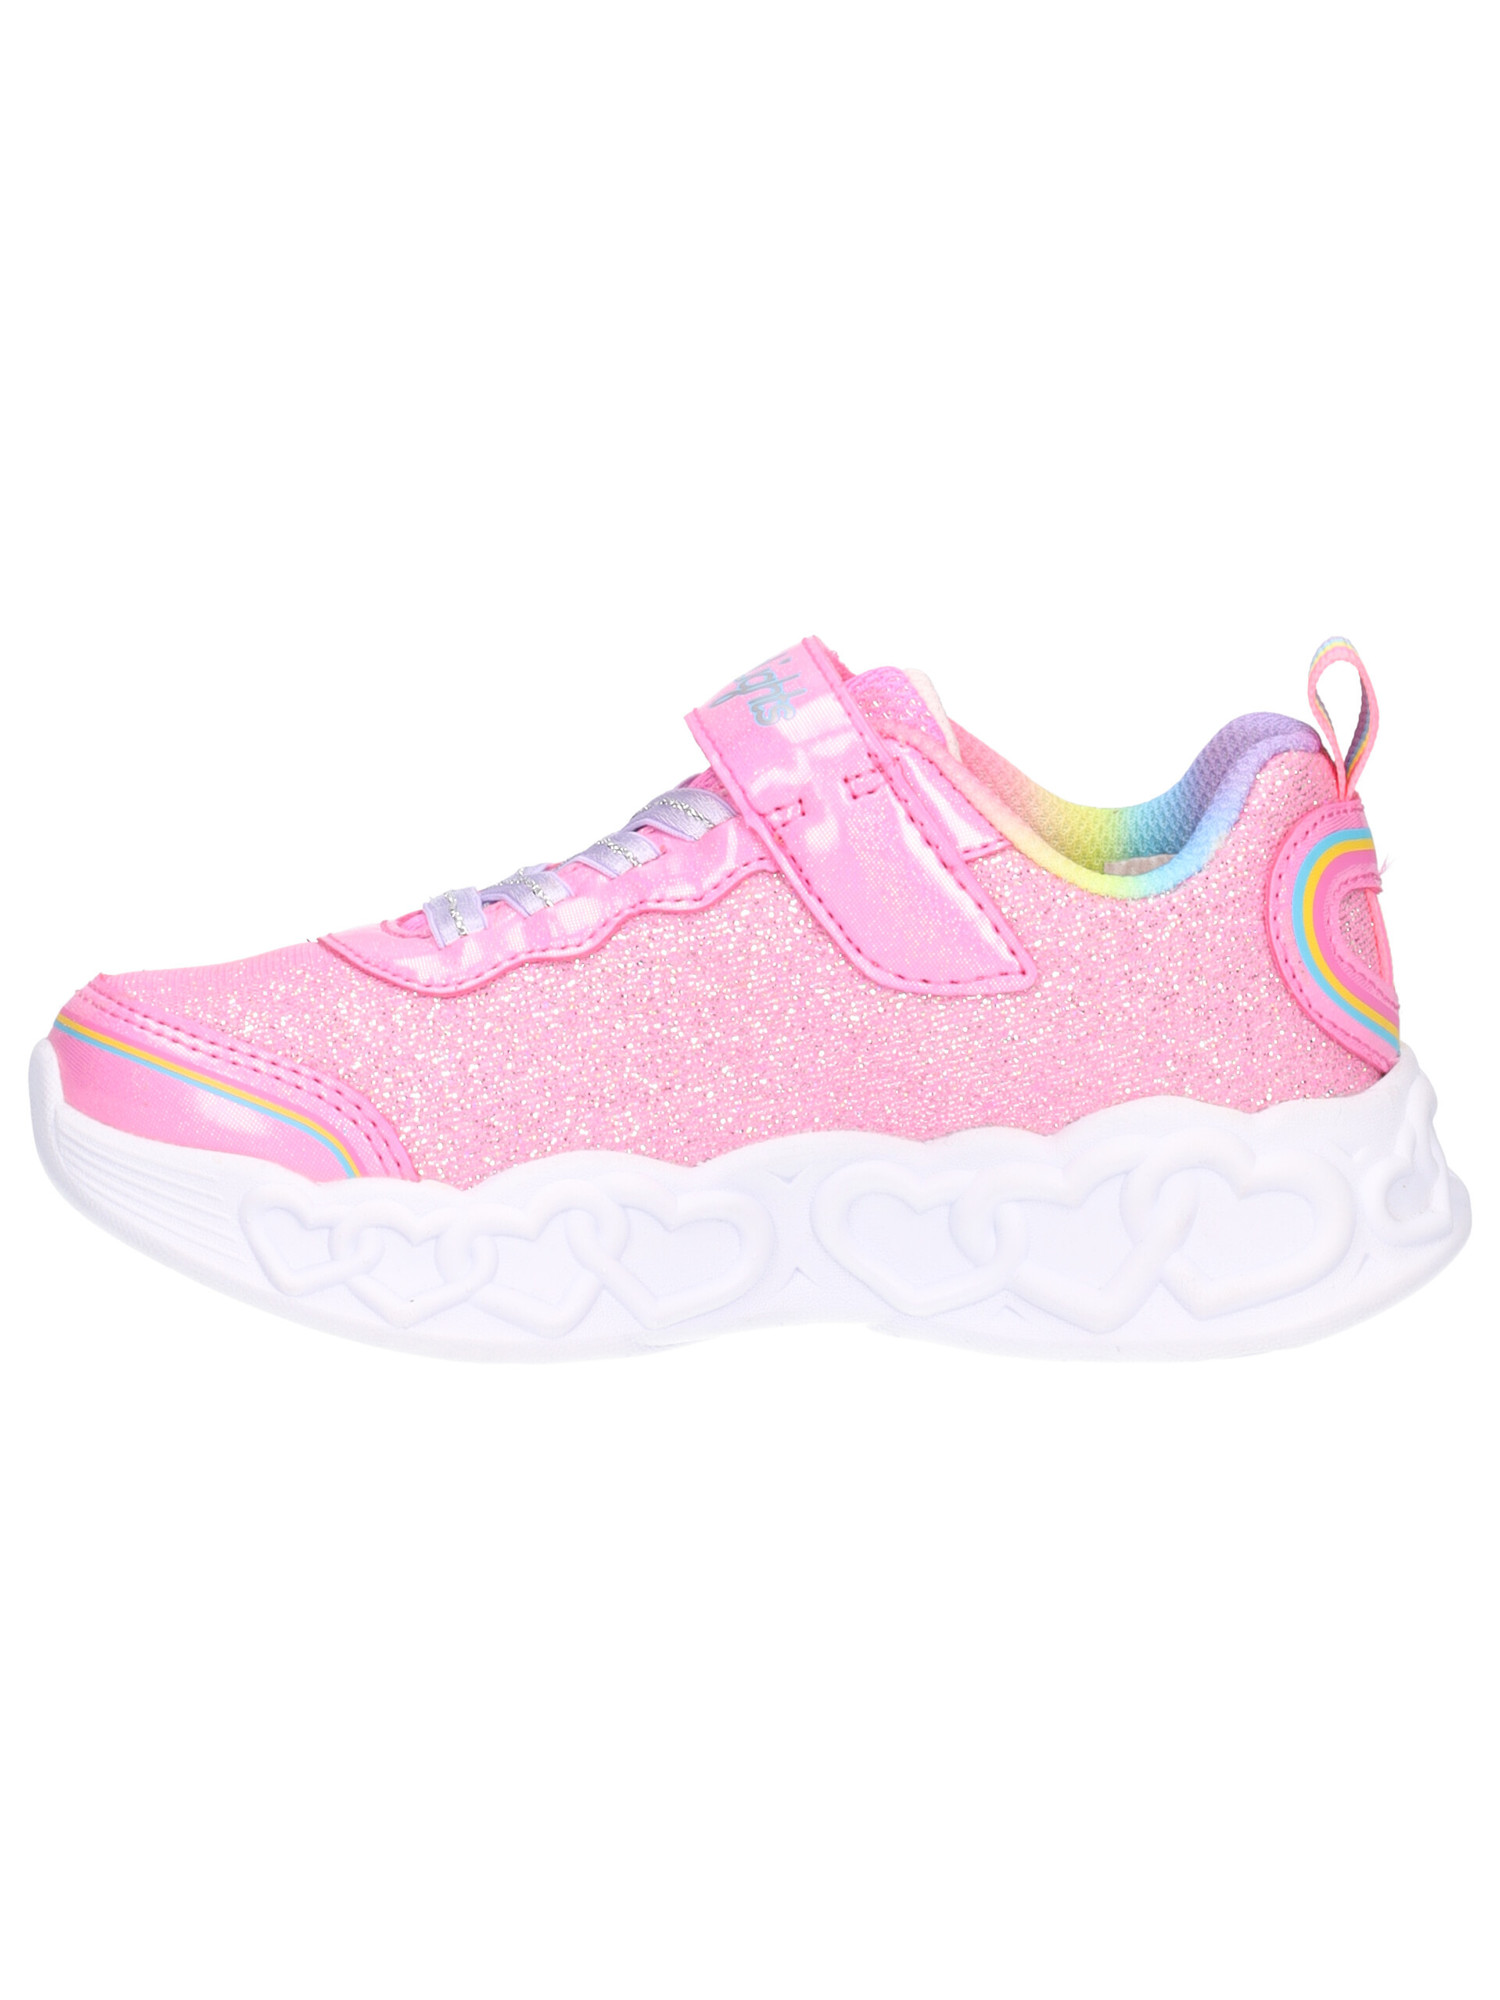 sneaker-skechers-da-bambina-rosa-glitter